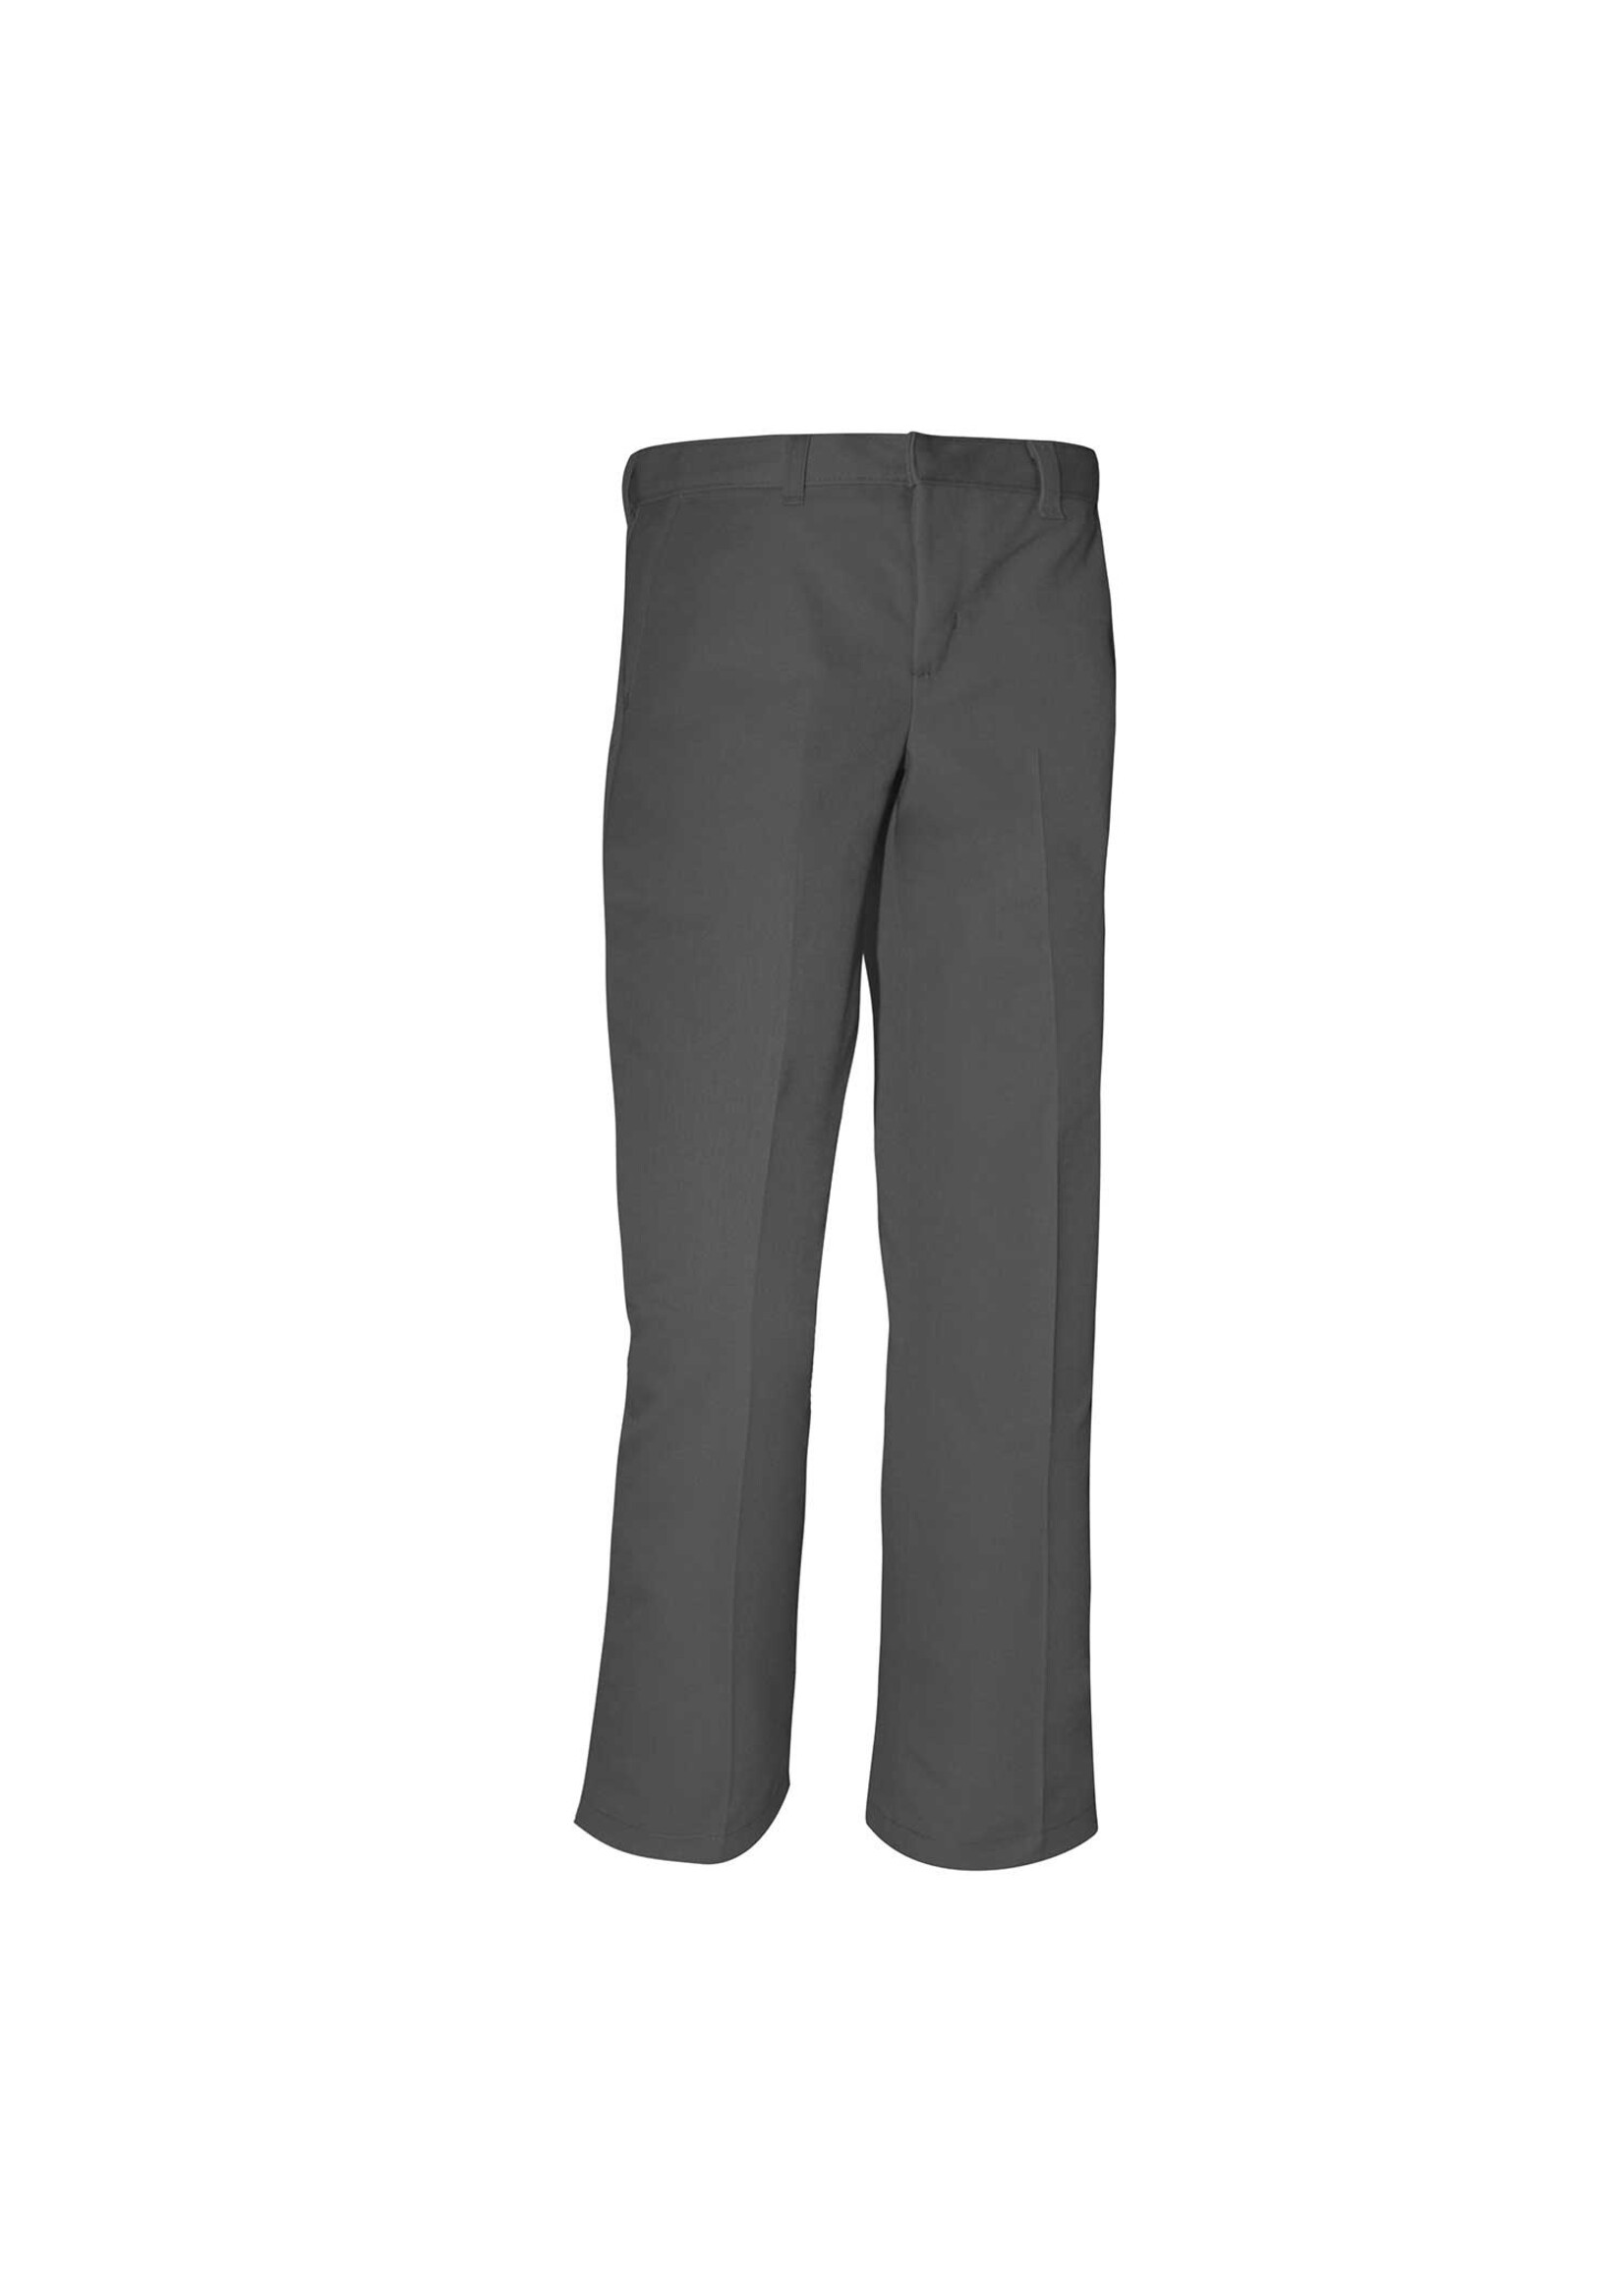 7750 Flat Front Pants - Boys (DG) Dark Grey - The Uniform Store